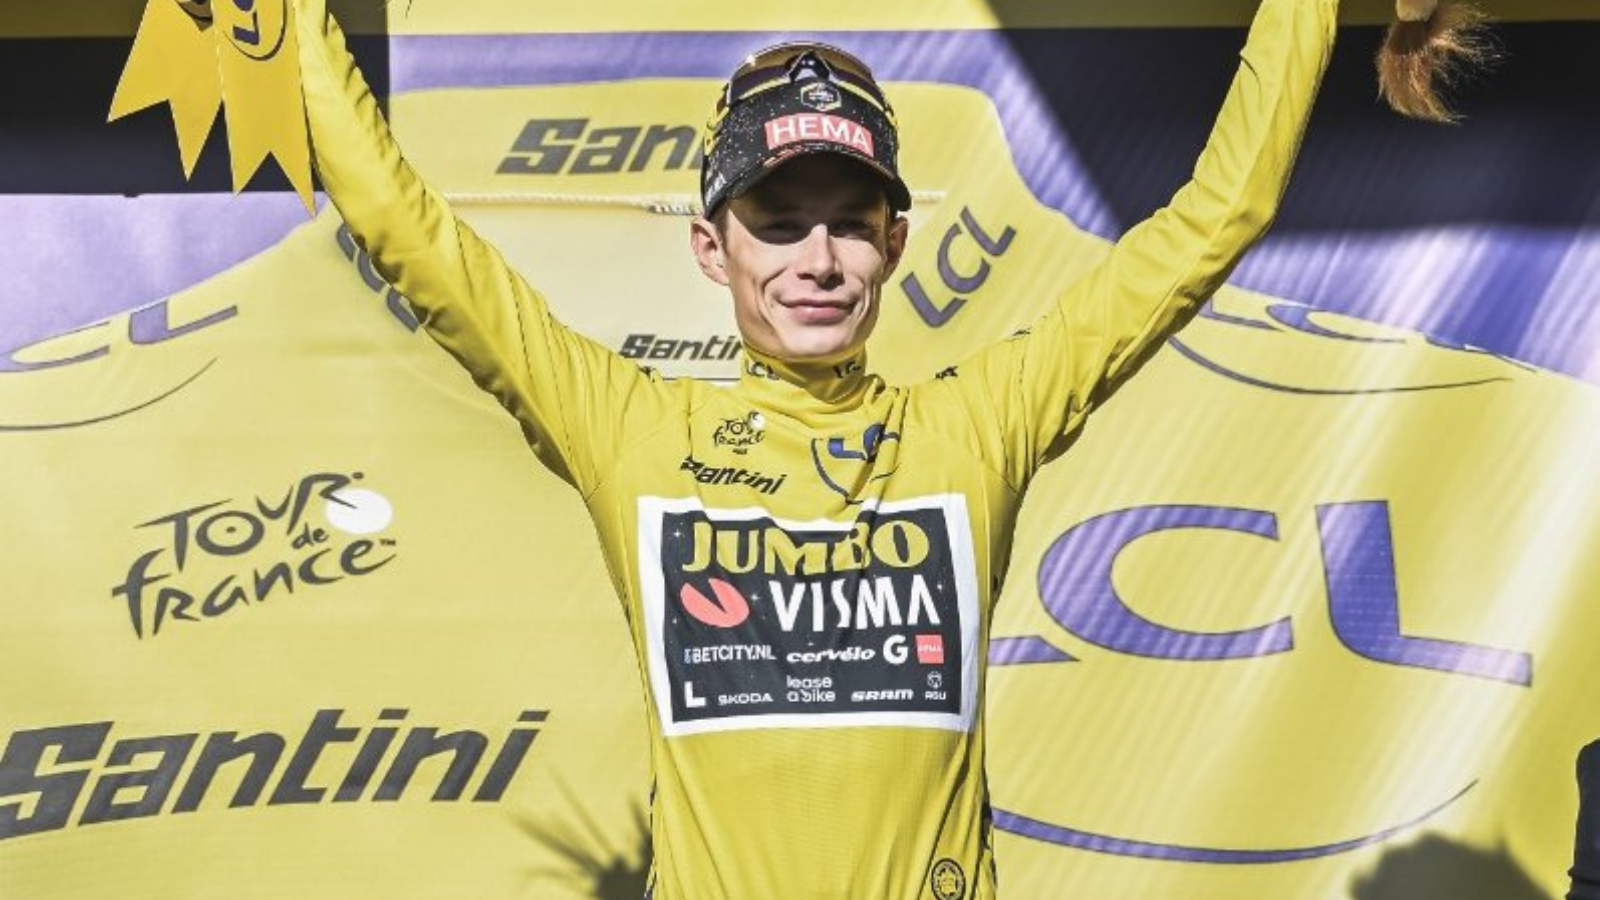 Jonas Vingegaard inyellow jersey at the Tour de Framce 2023